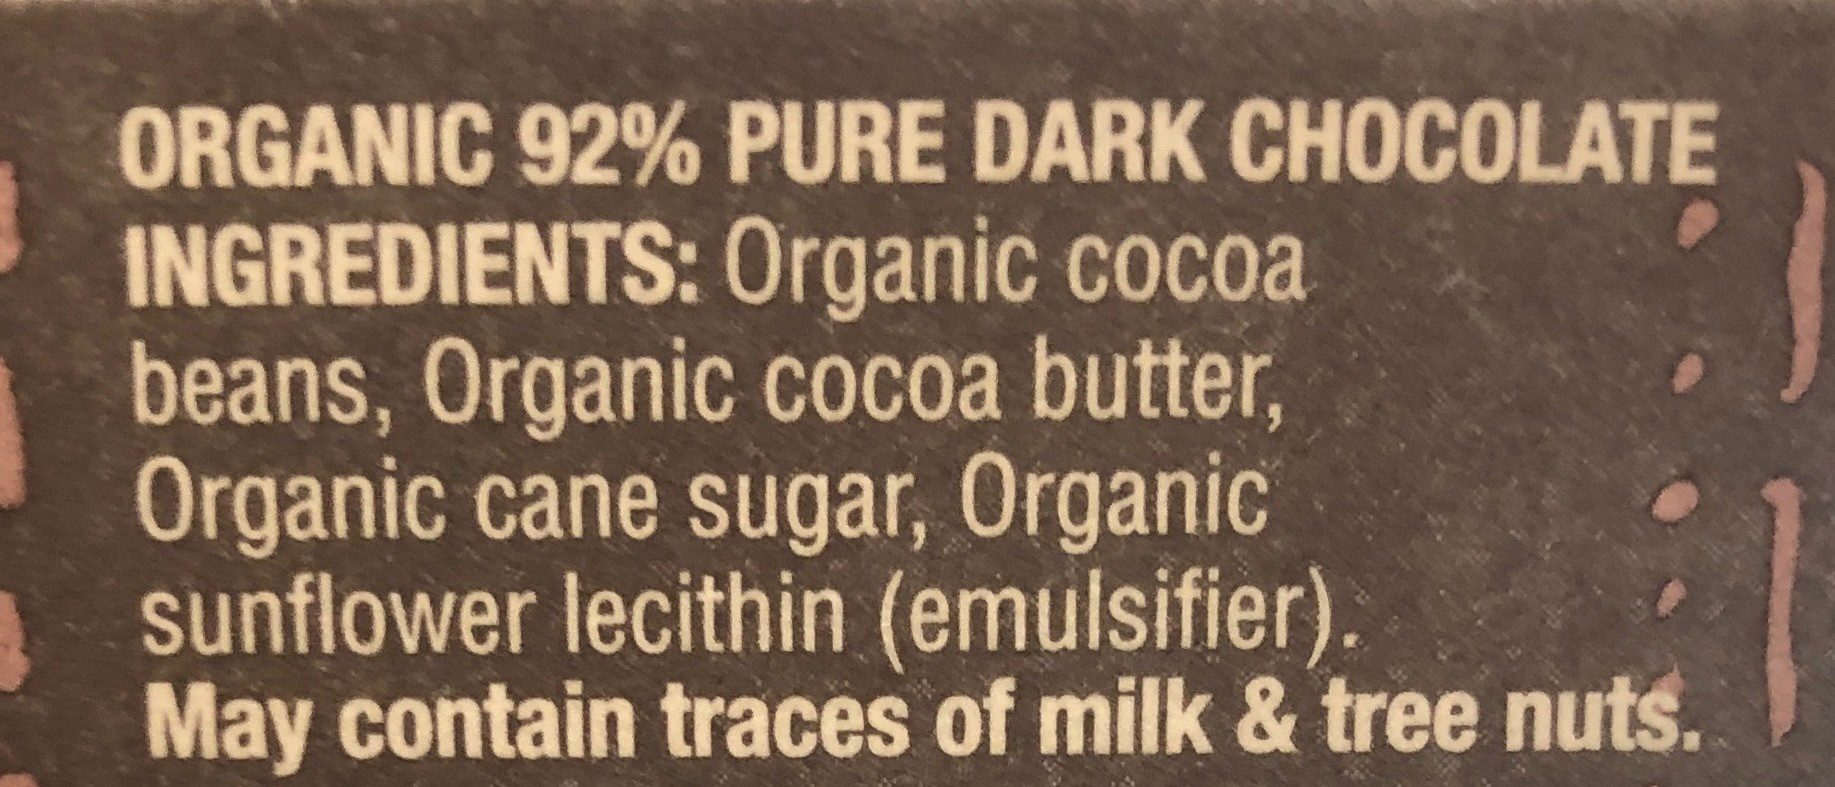 Madecasse 92% dark chocolate bar - Ingredients